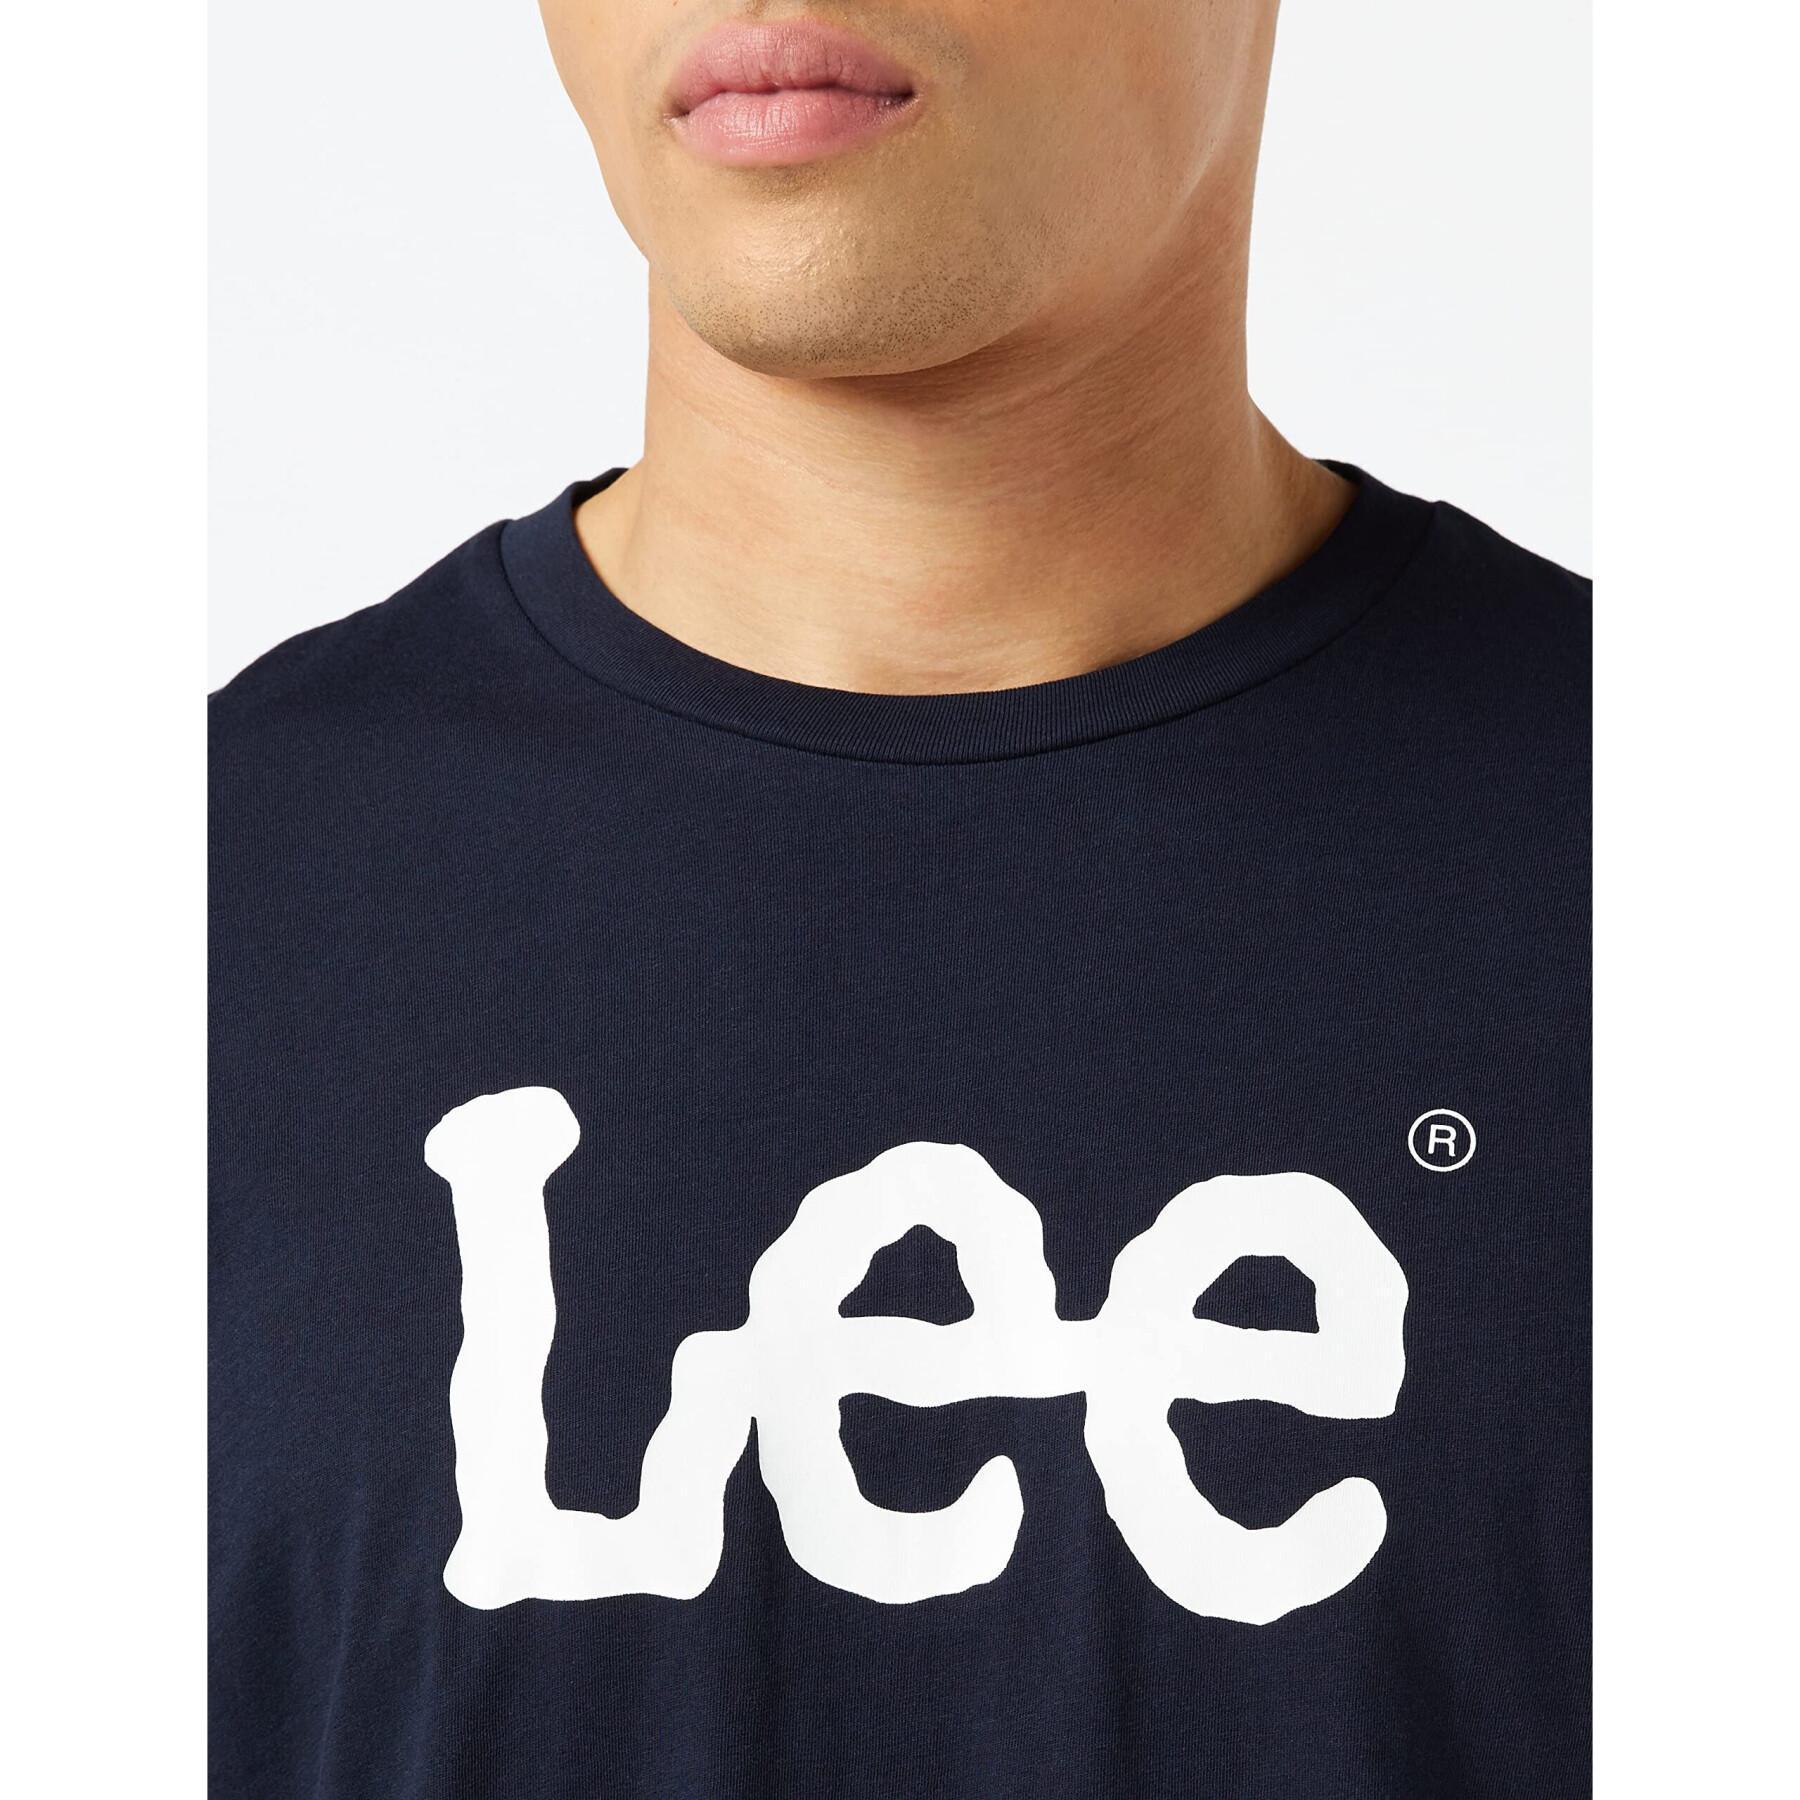 T-shirt Lee Logo